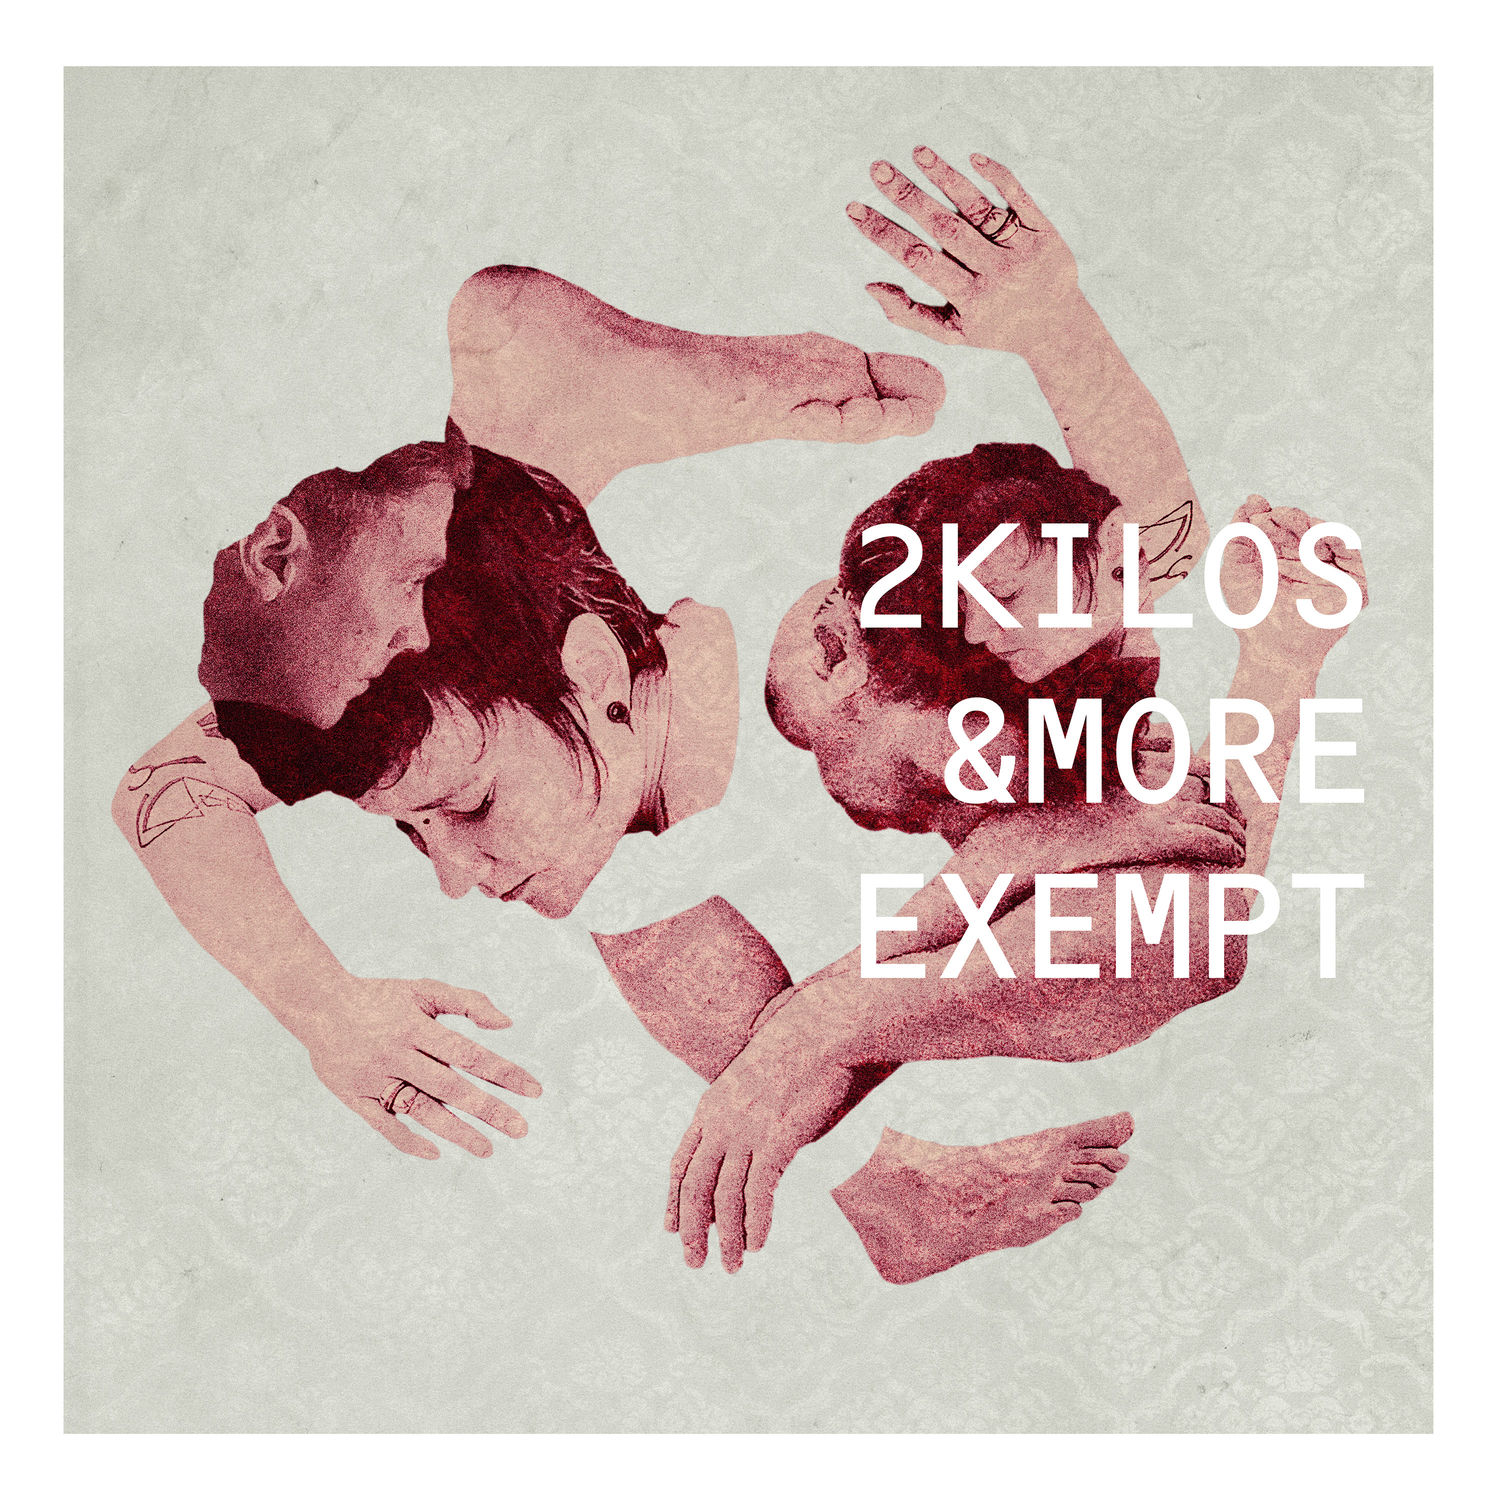 2kilos &more – Exempt